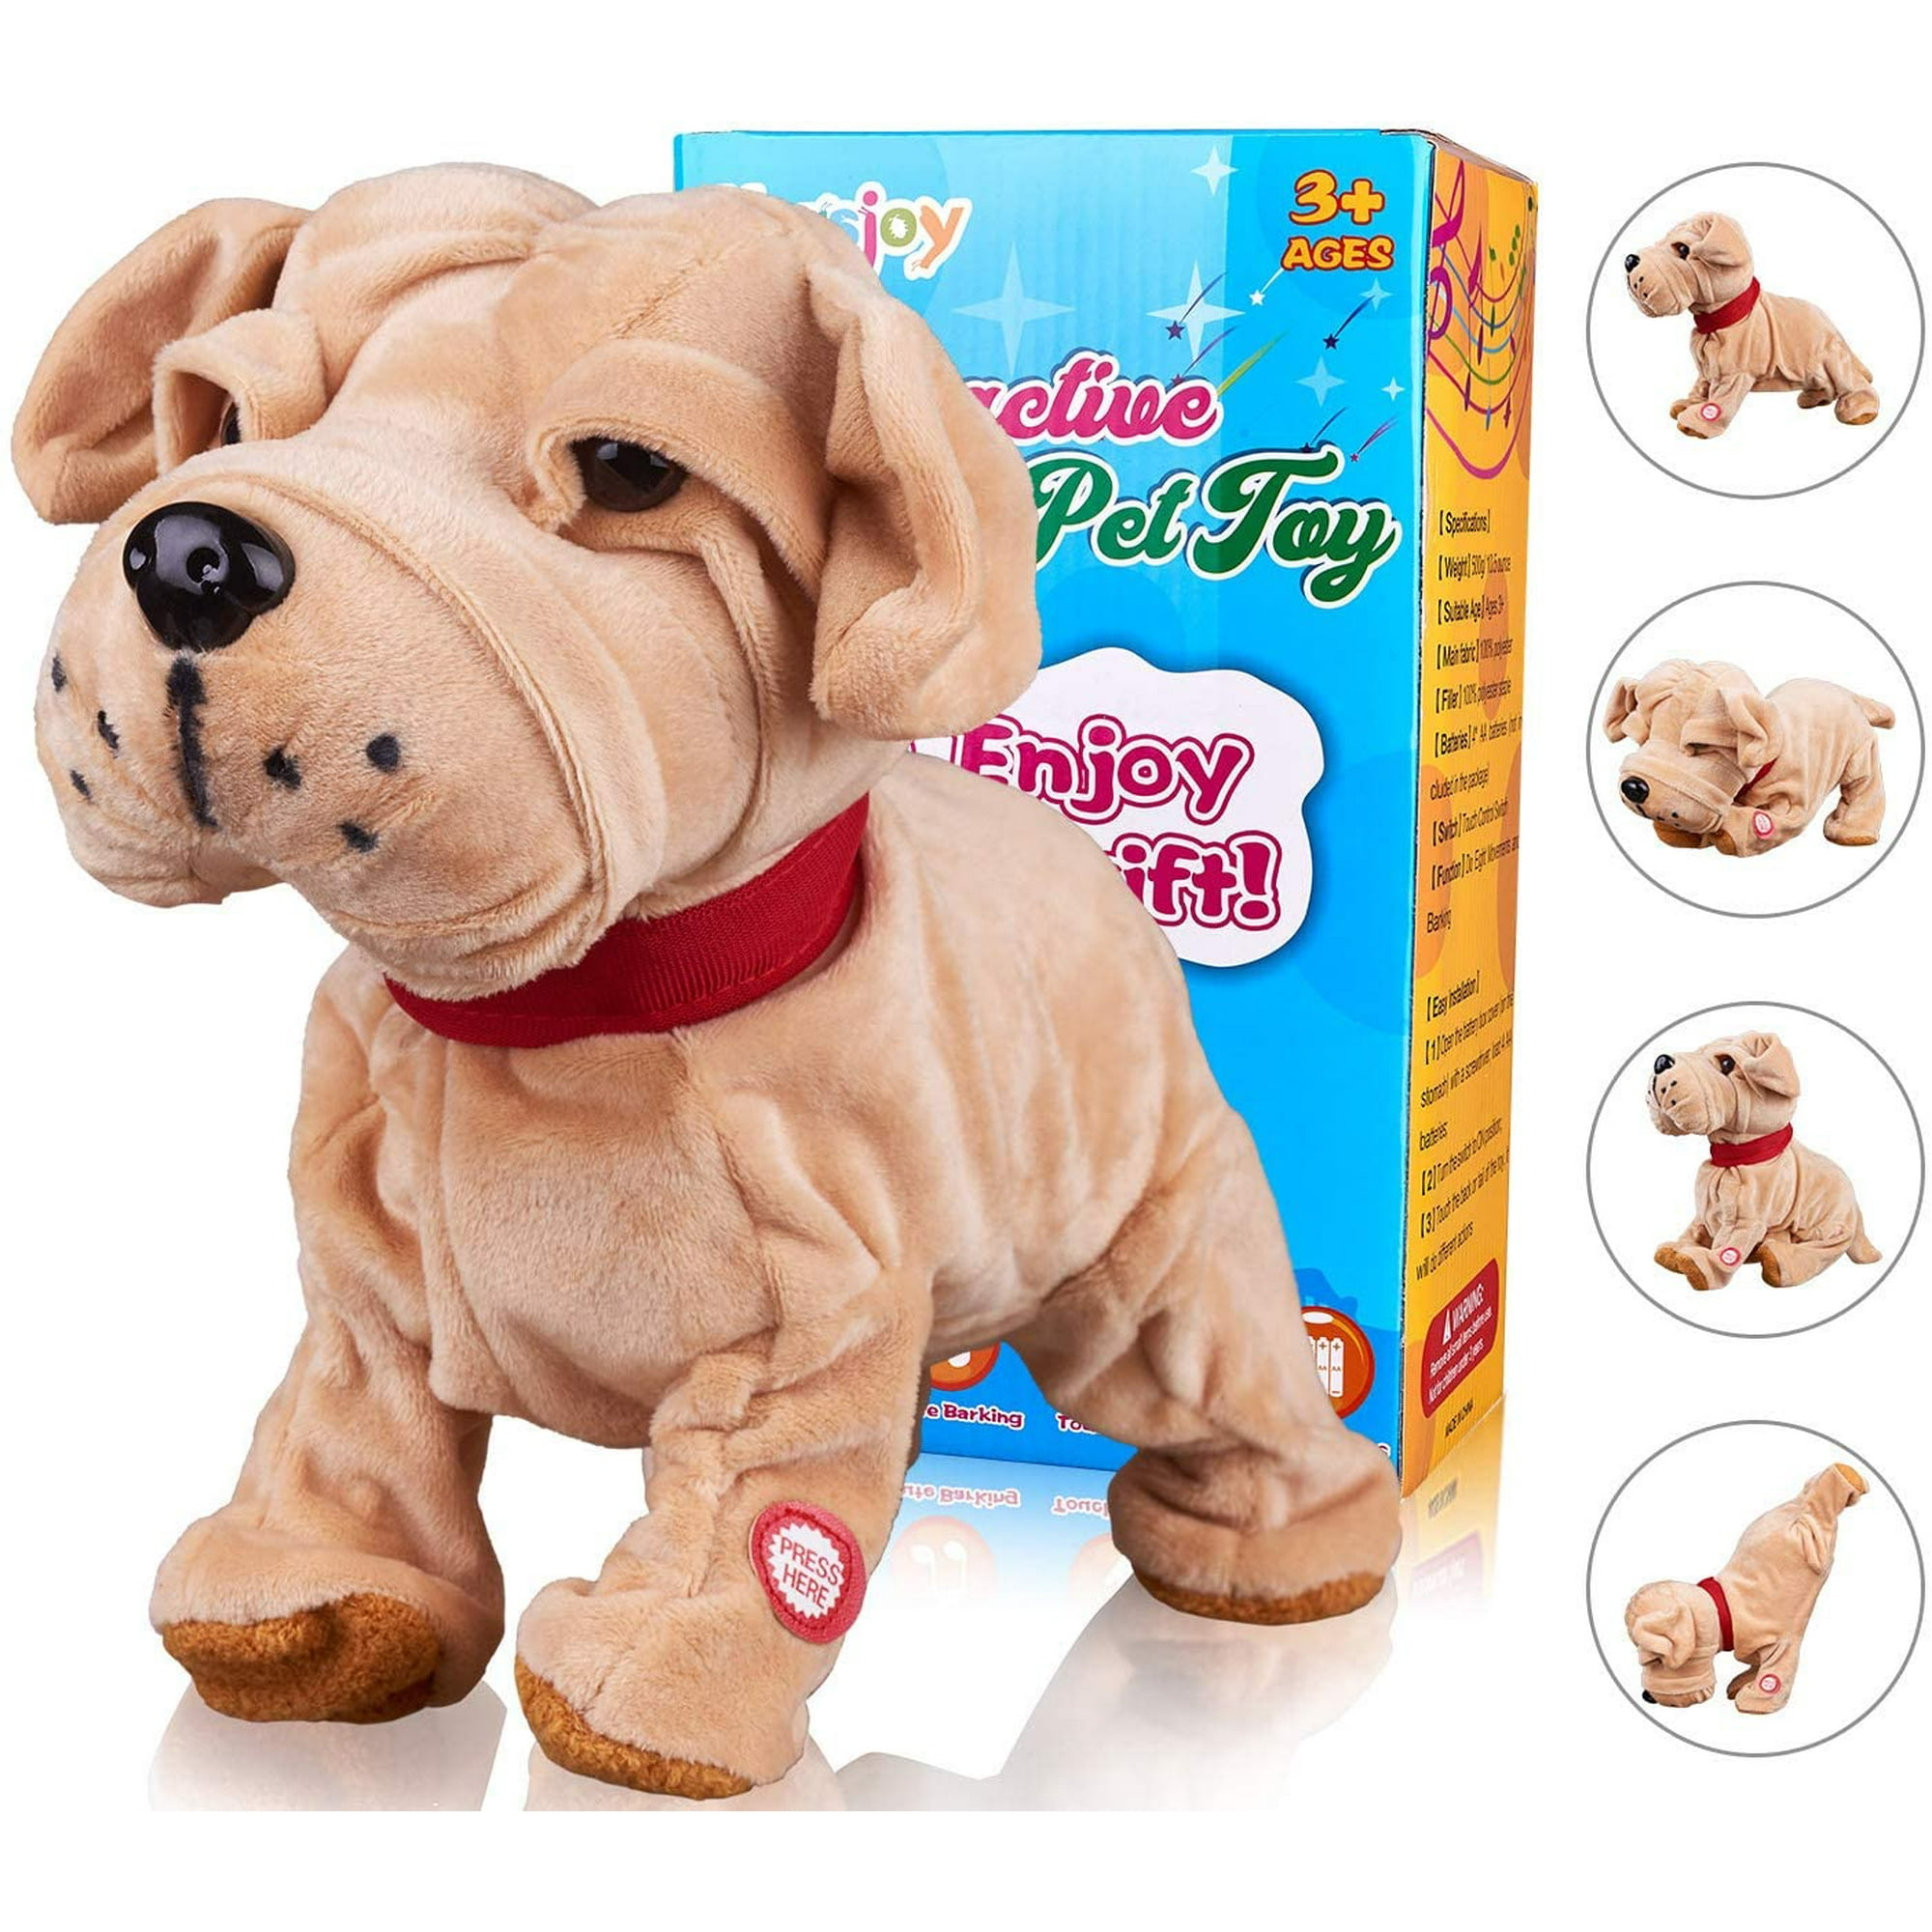 Bulldog Robot Toy Dog, Electronic Dog Toy, Plush Stuffed Animal Dog Toy ,  Interactive Puppy Plush Animated Dog, Touch Control, Robot Dog for Toddler  Boys Gir Kids Length 12